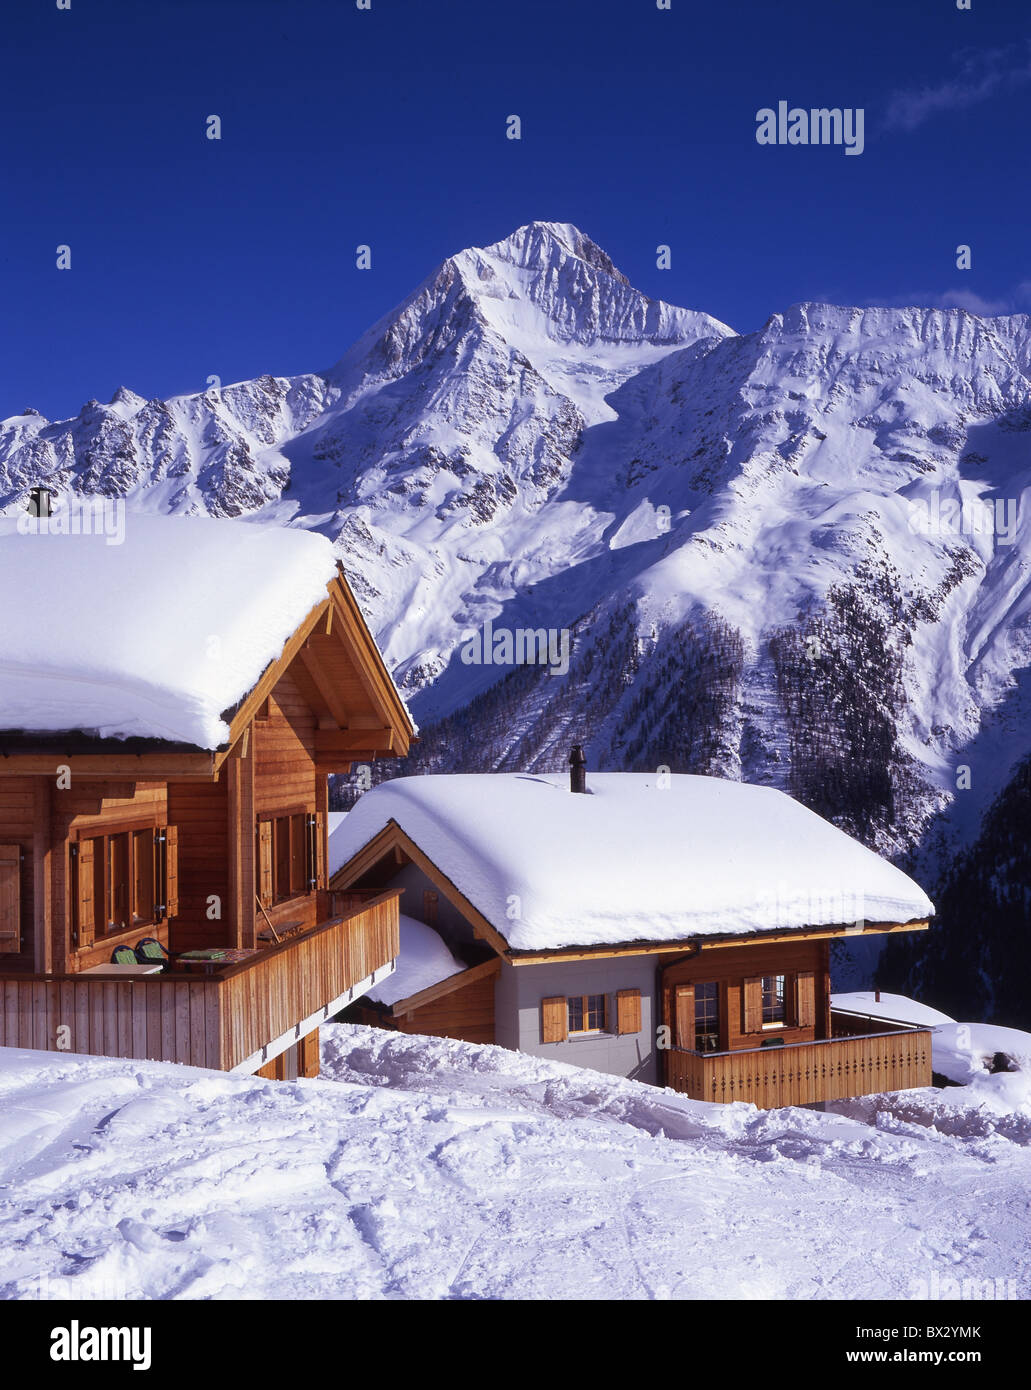 Winter Sommer Hütte Sommer Ferienhäuser Chalet Chalet beherbergt Häuser  Lauchernalp Kanton Wallis Schweiz Europ Stockfotografie - Alamy